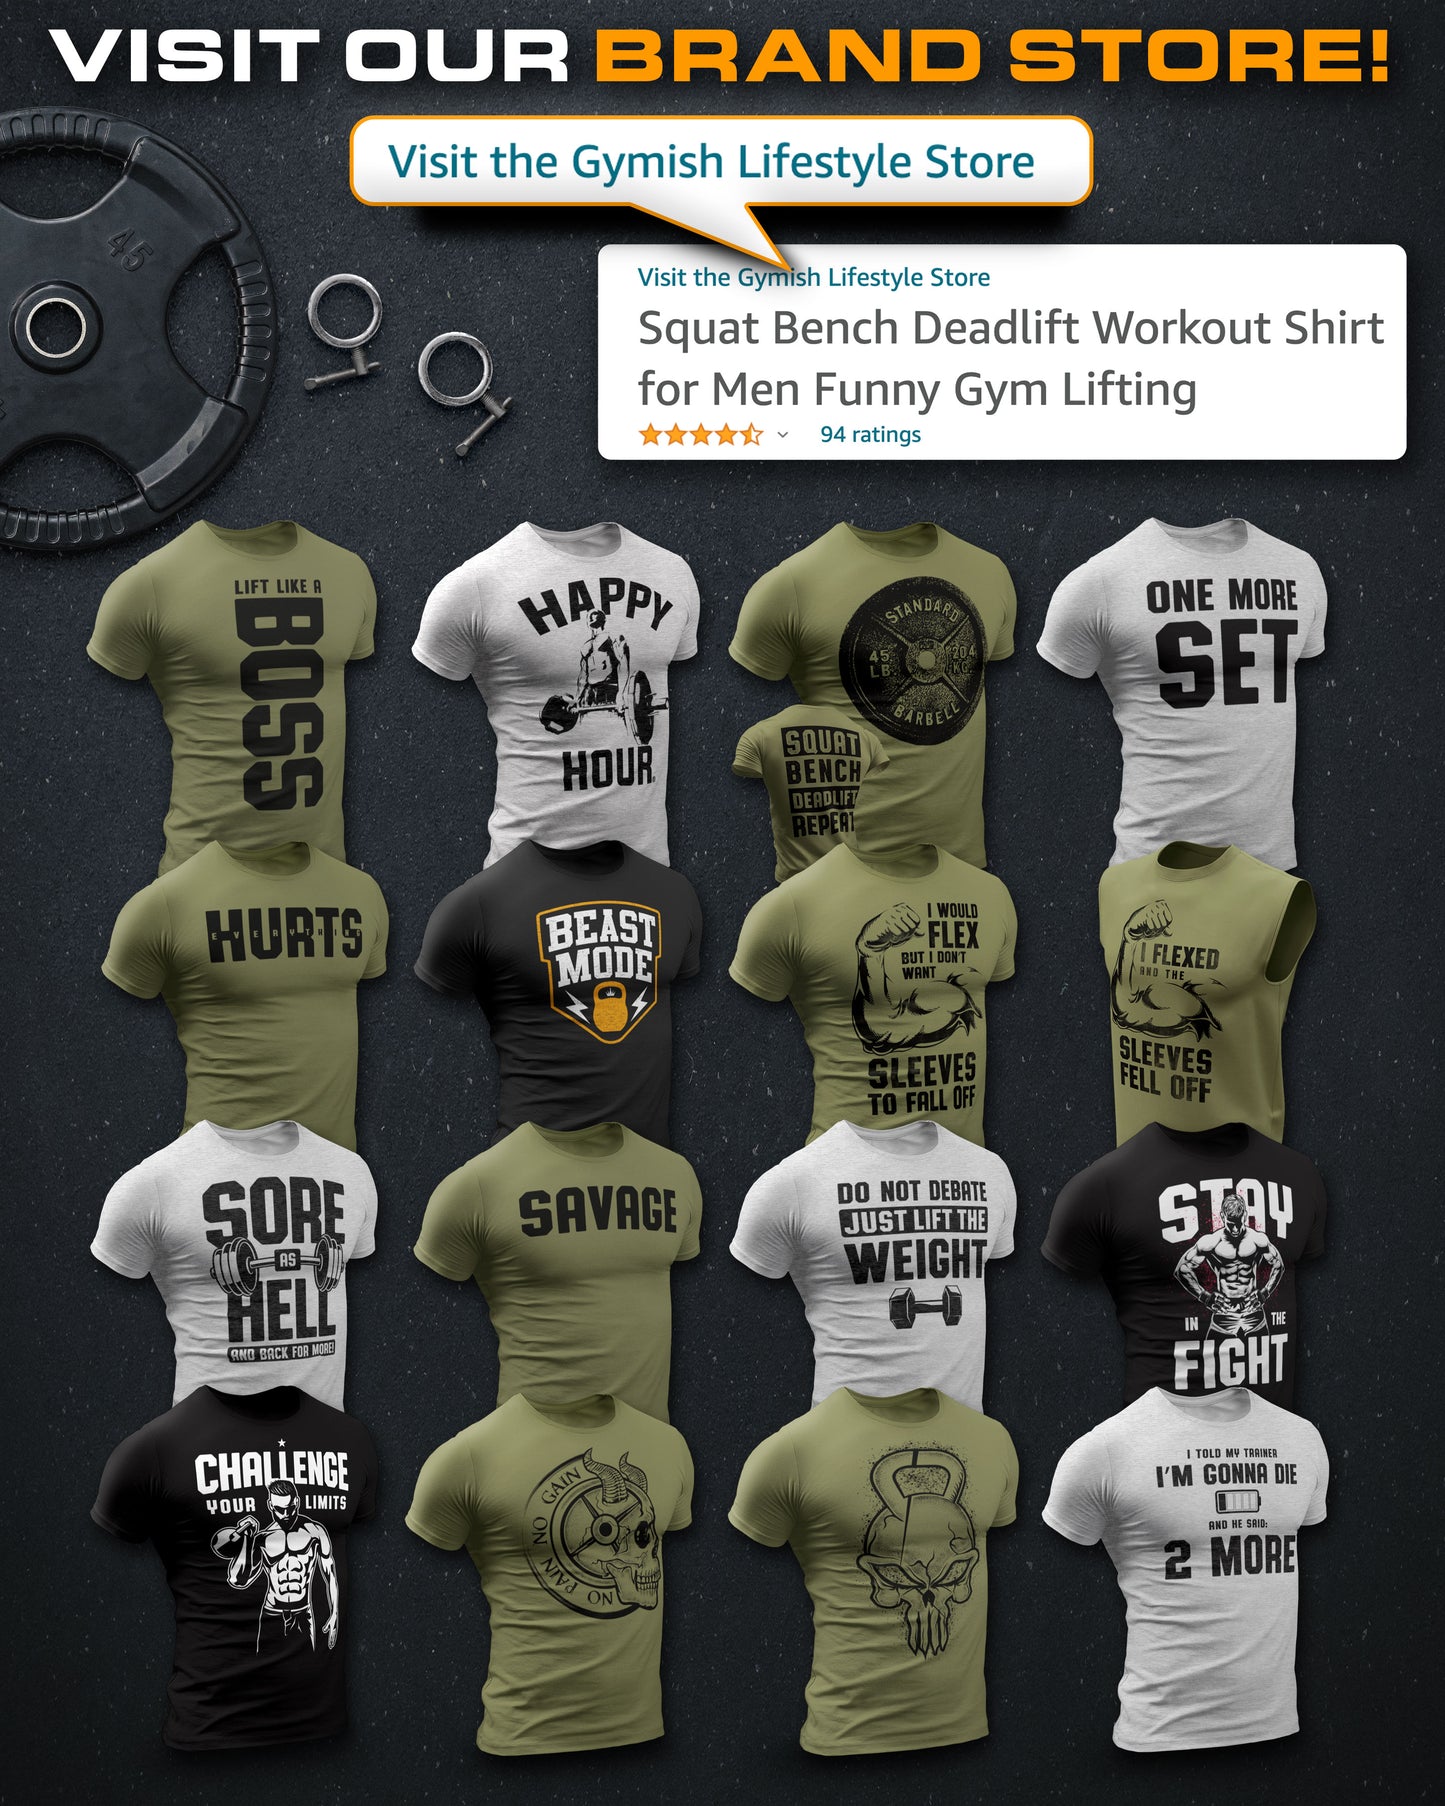 73- RAGLAN Get Up Workout Gym T-Shirt for Men